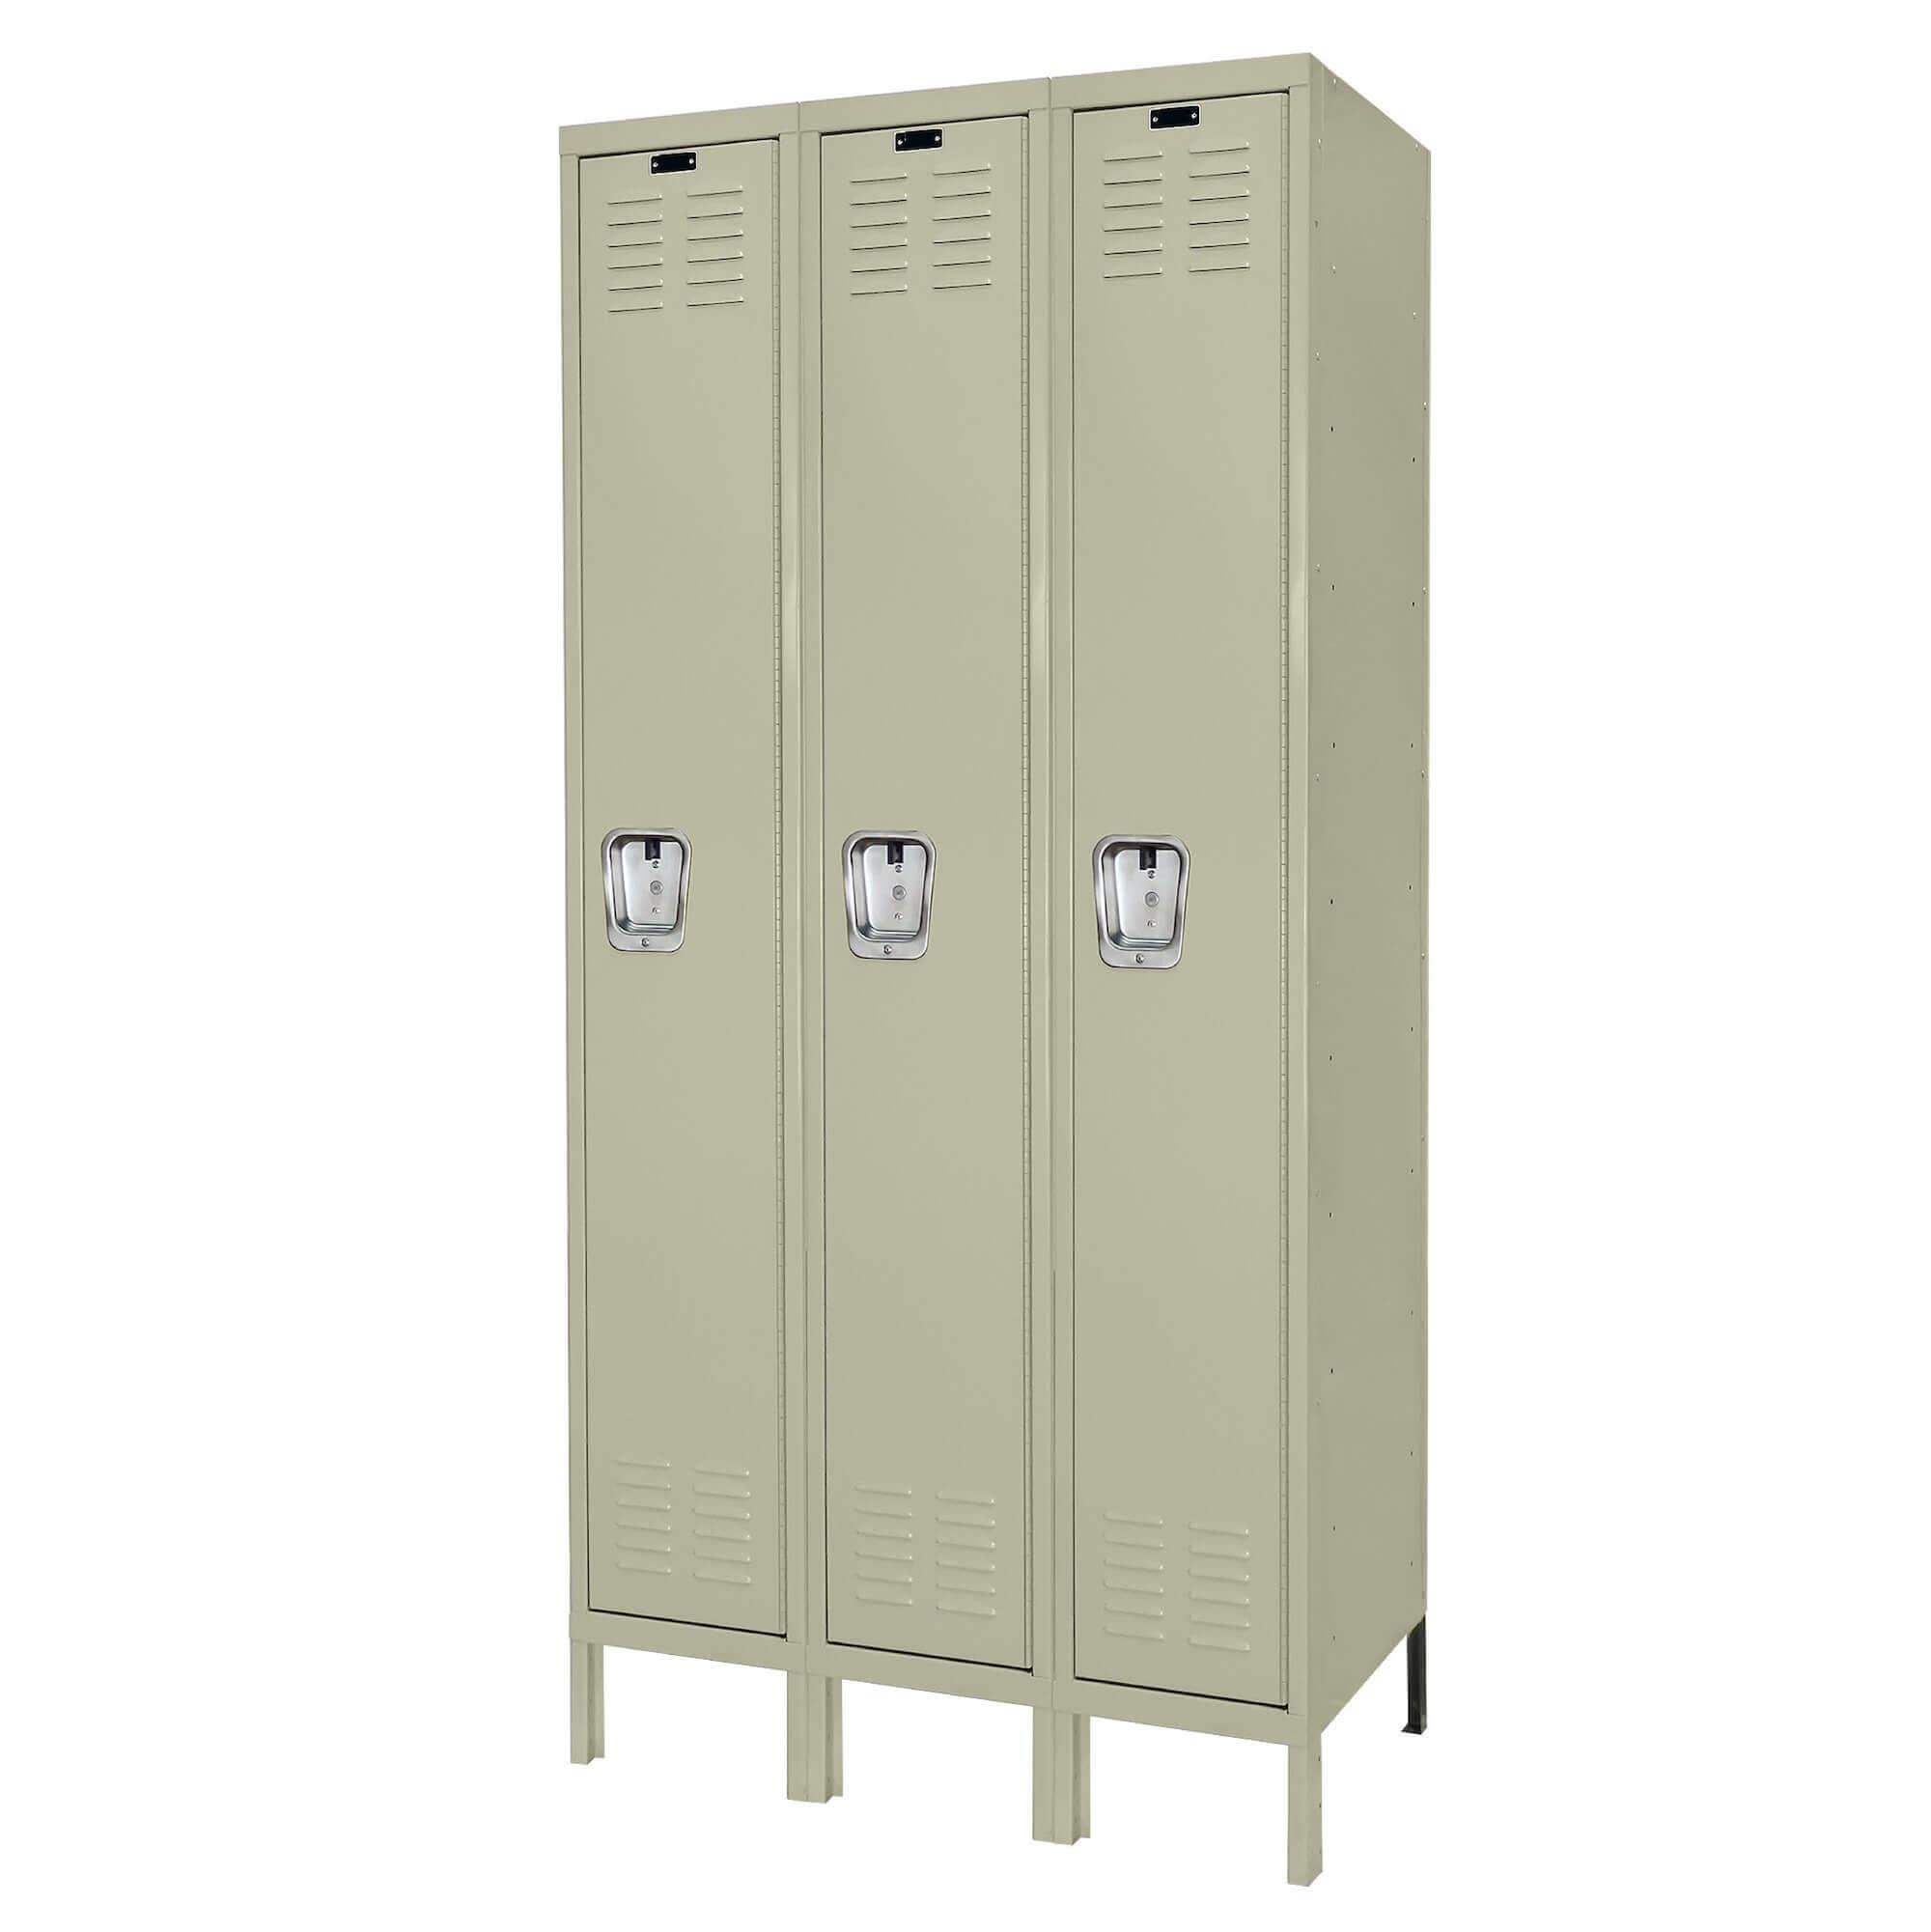 Employee lockers metal lockers patriot series wardrobe lockers 3w 1t tan angle view